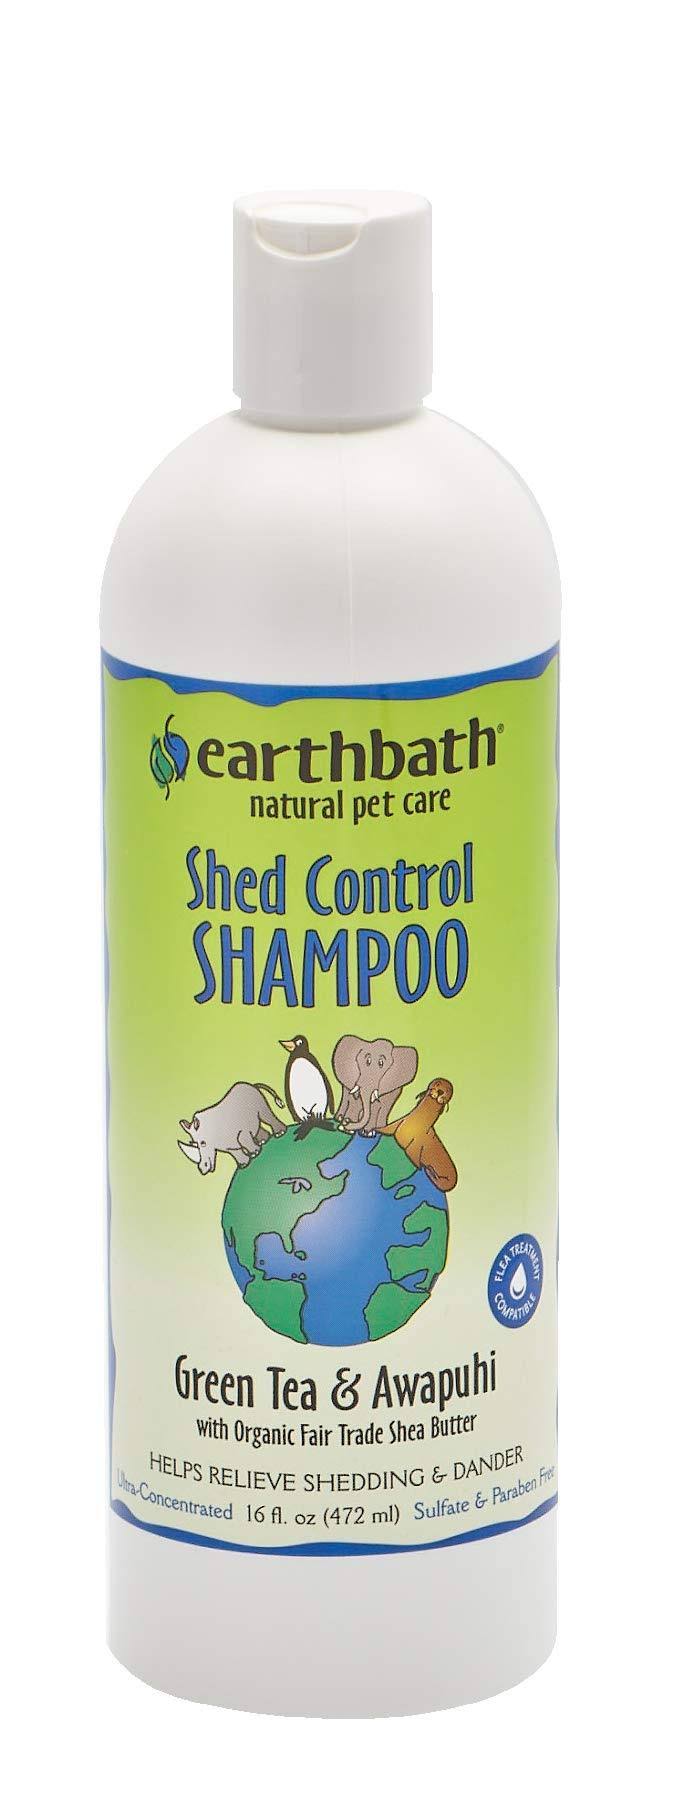 EarthBath Shed Control Shampoo - Green Tea & Awapuhi, 472ml